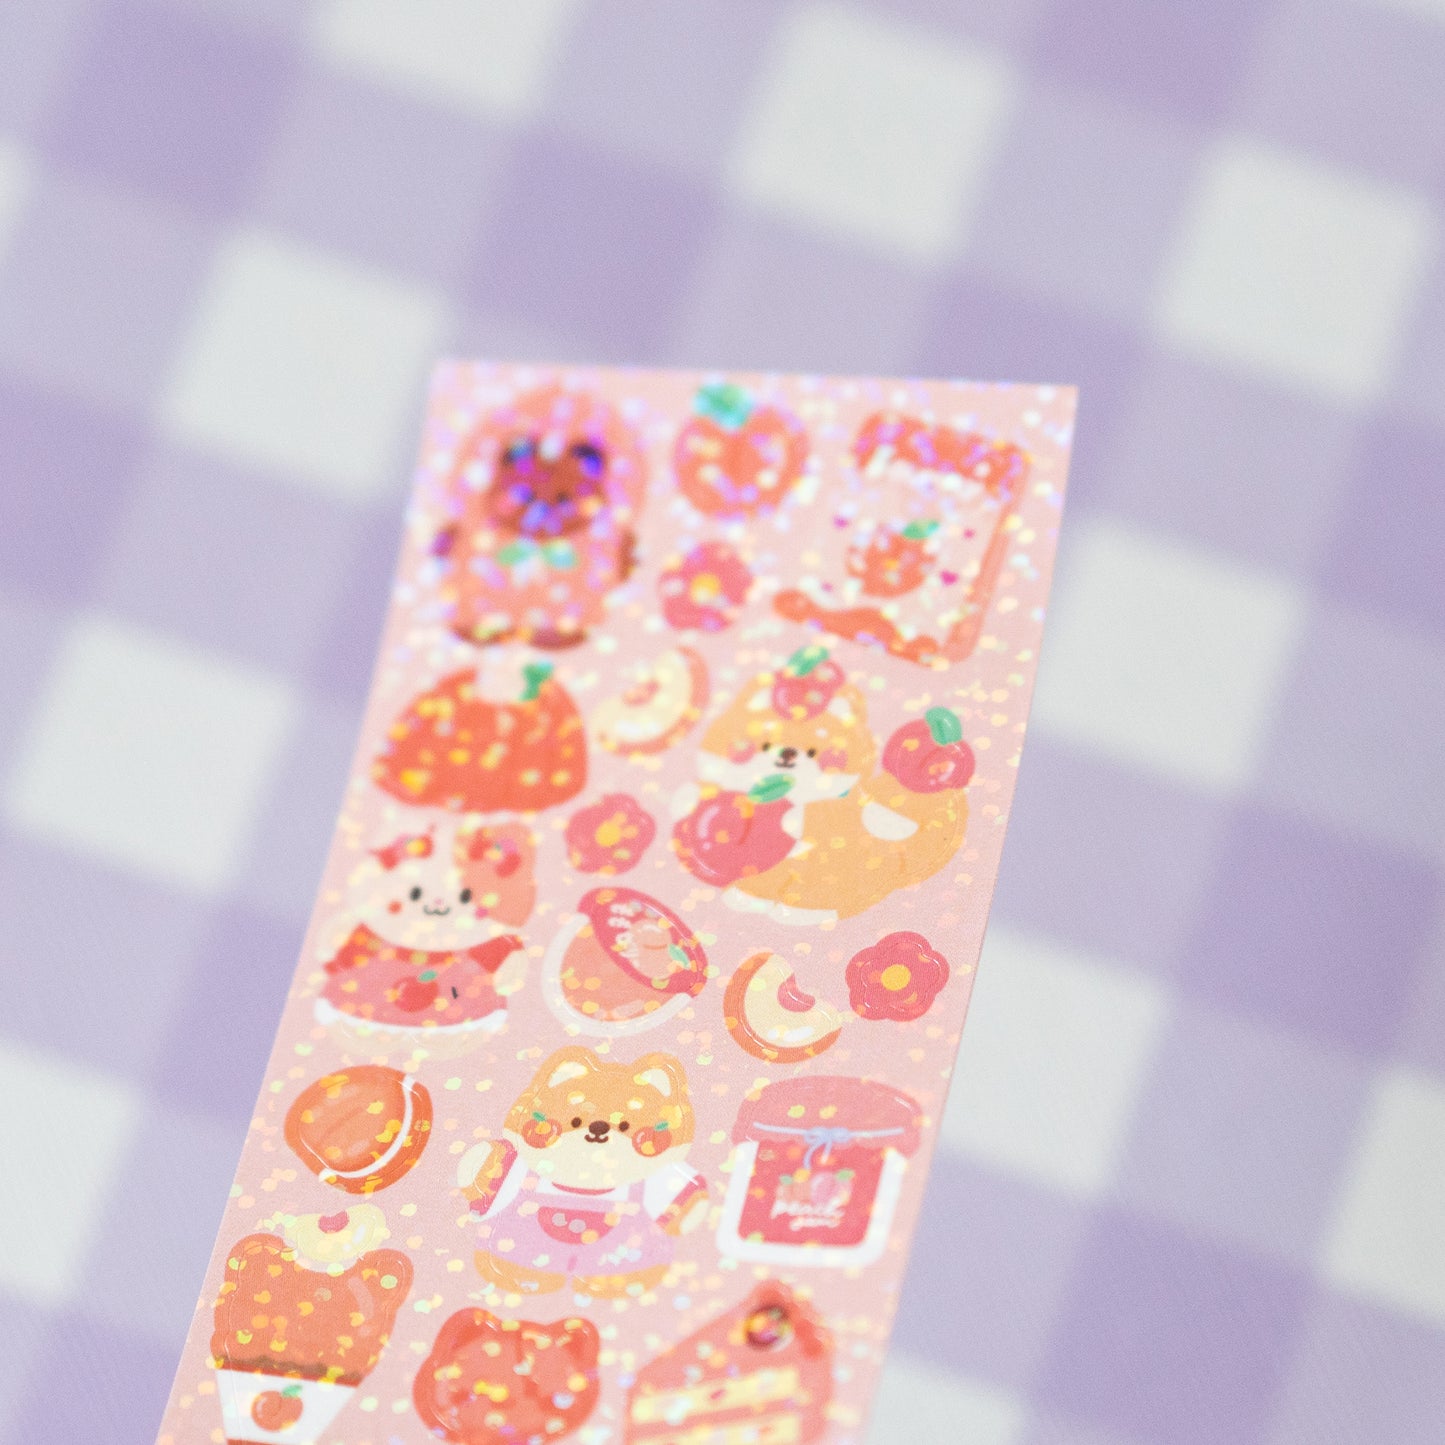 Peach Desserts Journal Sticker Sheet